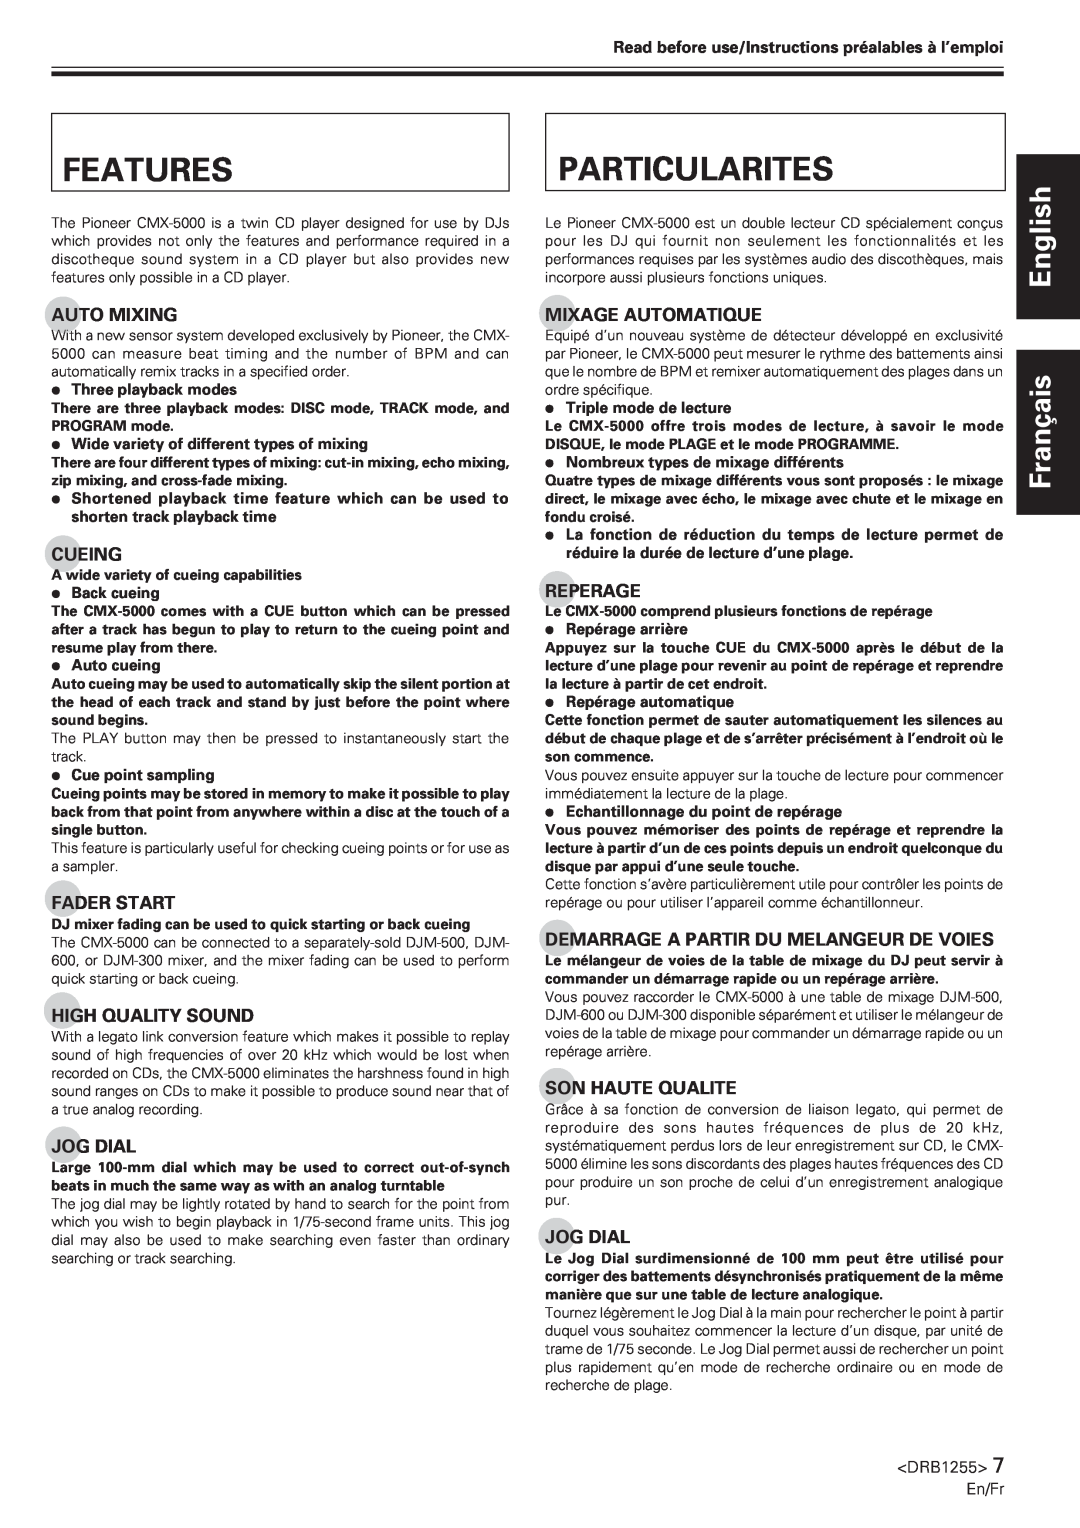 Pioneer CMX-5000 manual Features, Particularites, English, Français 